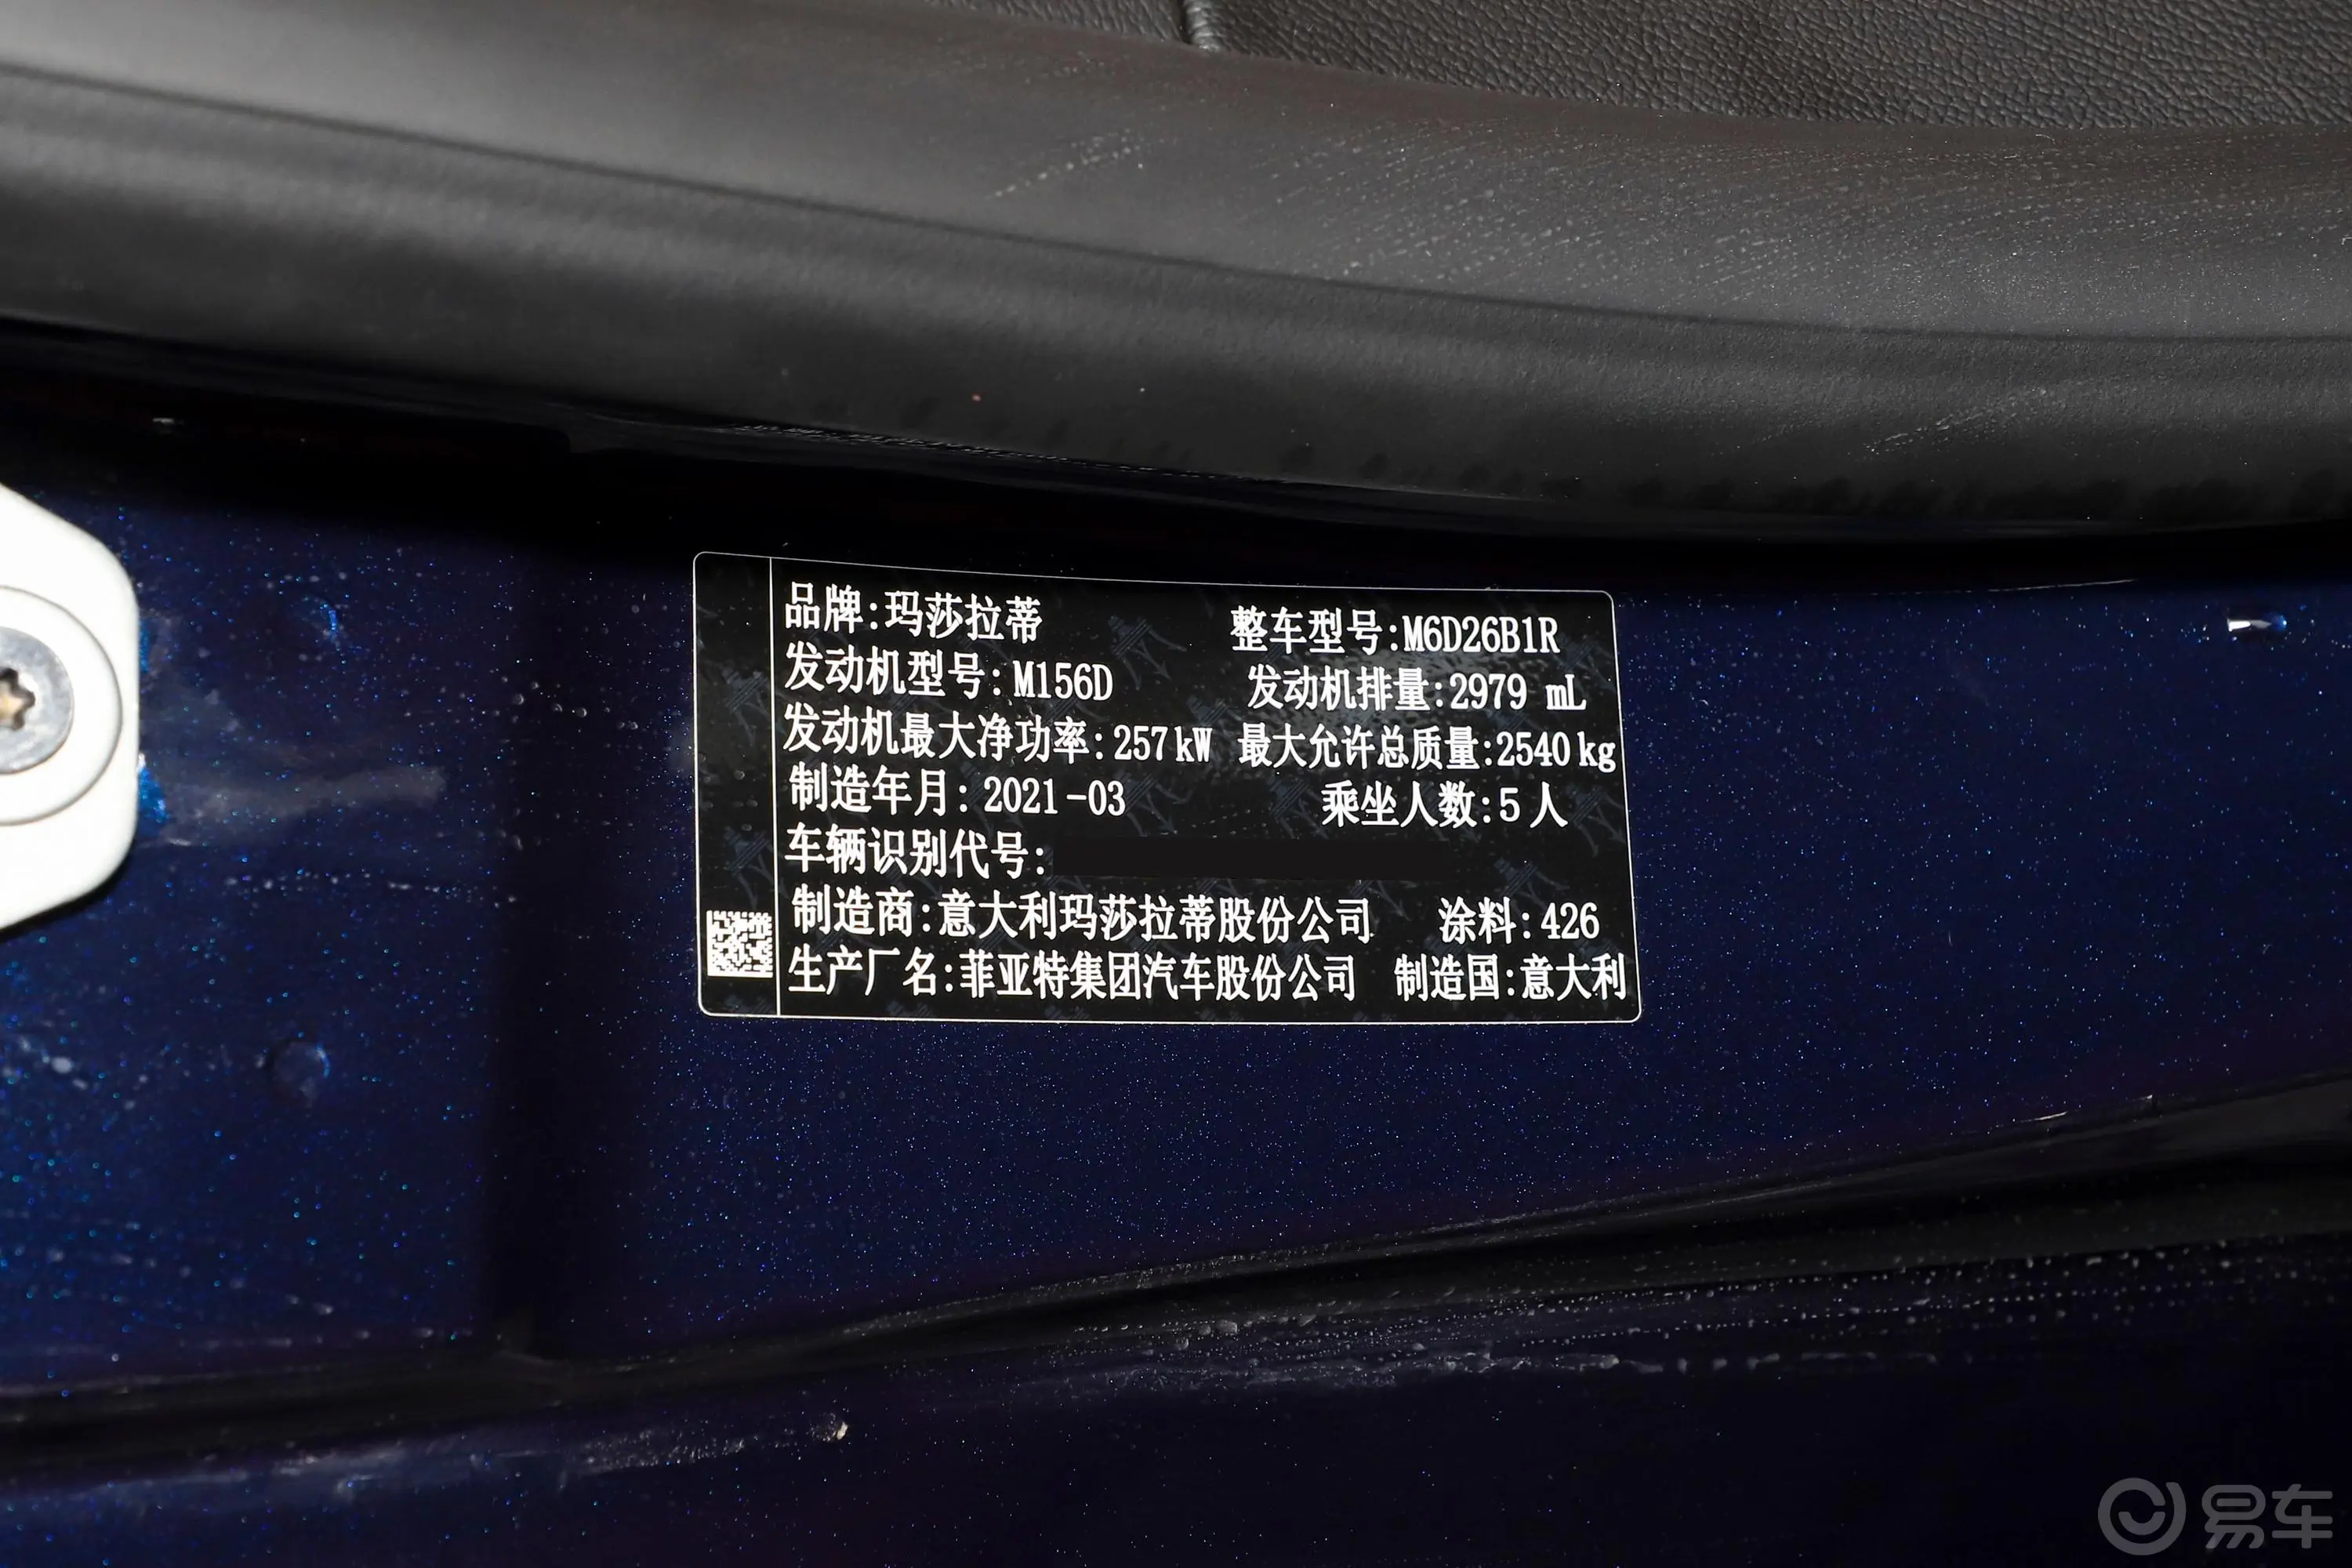 Quattroporte3.0T 豪华版车辆信息铭牌